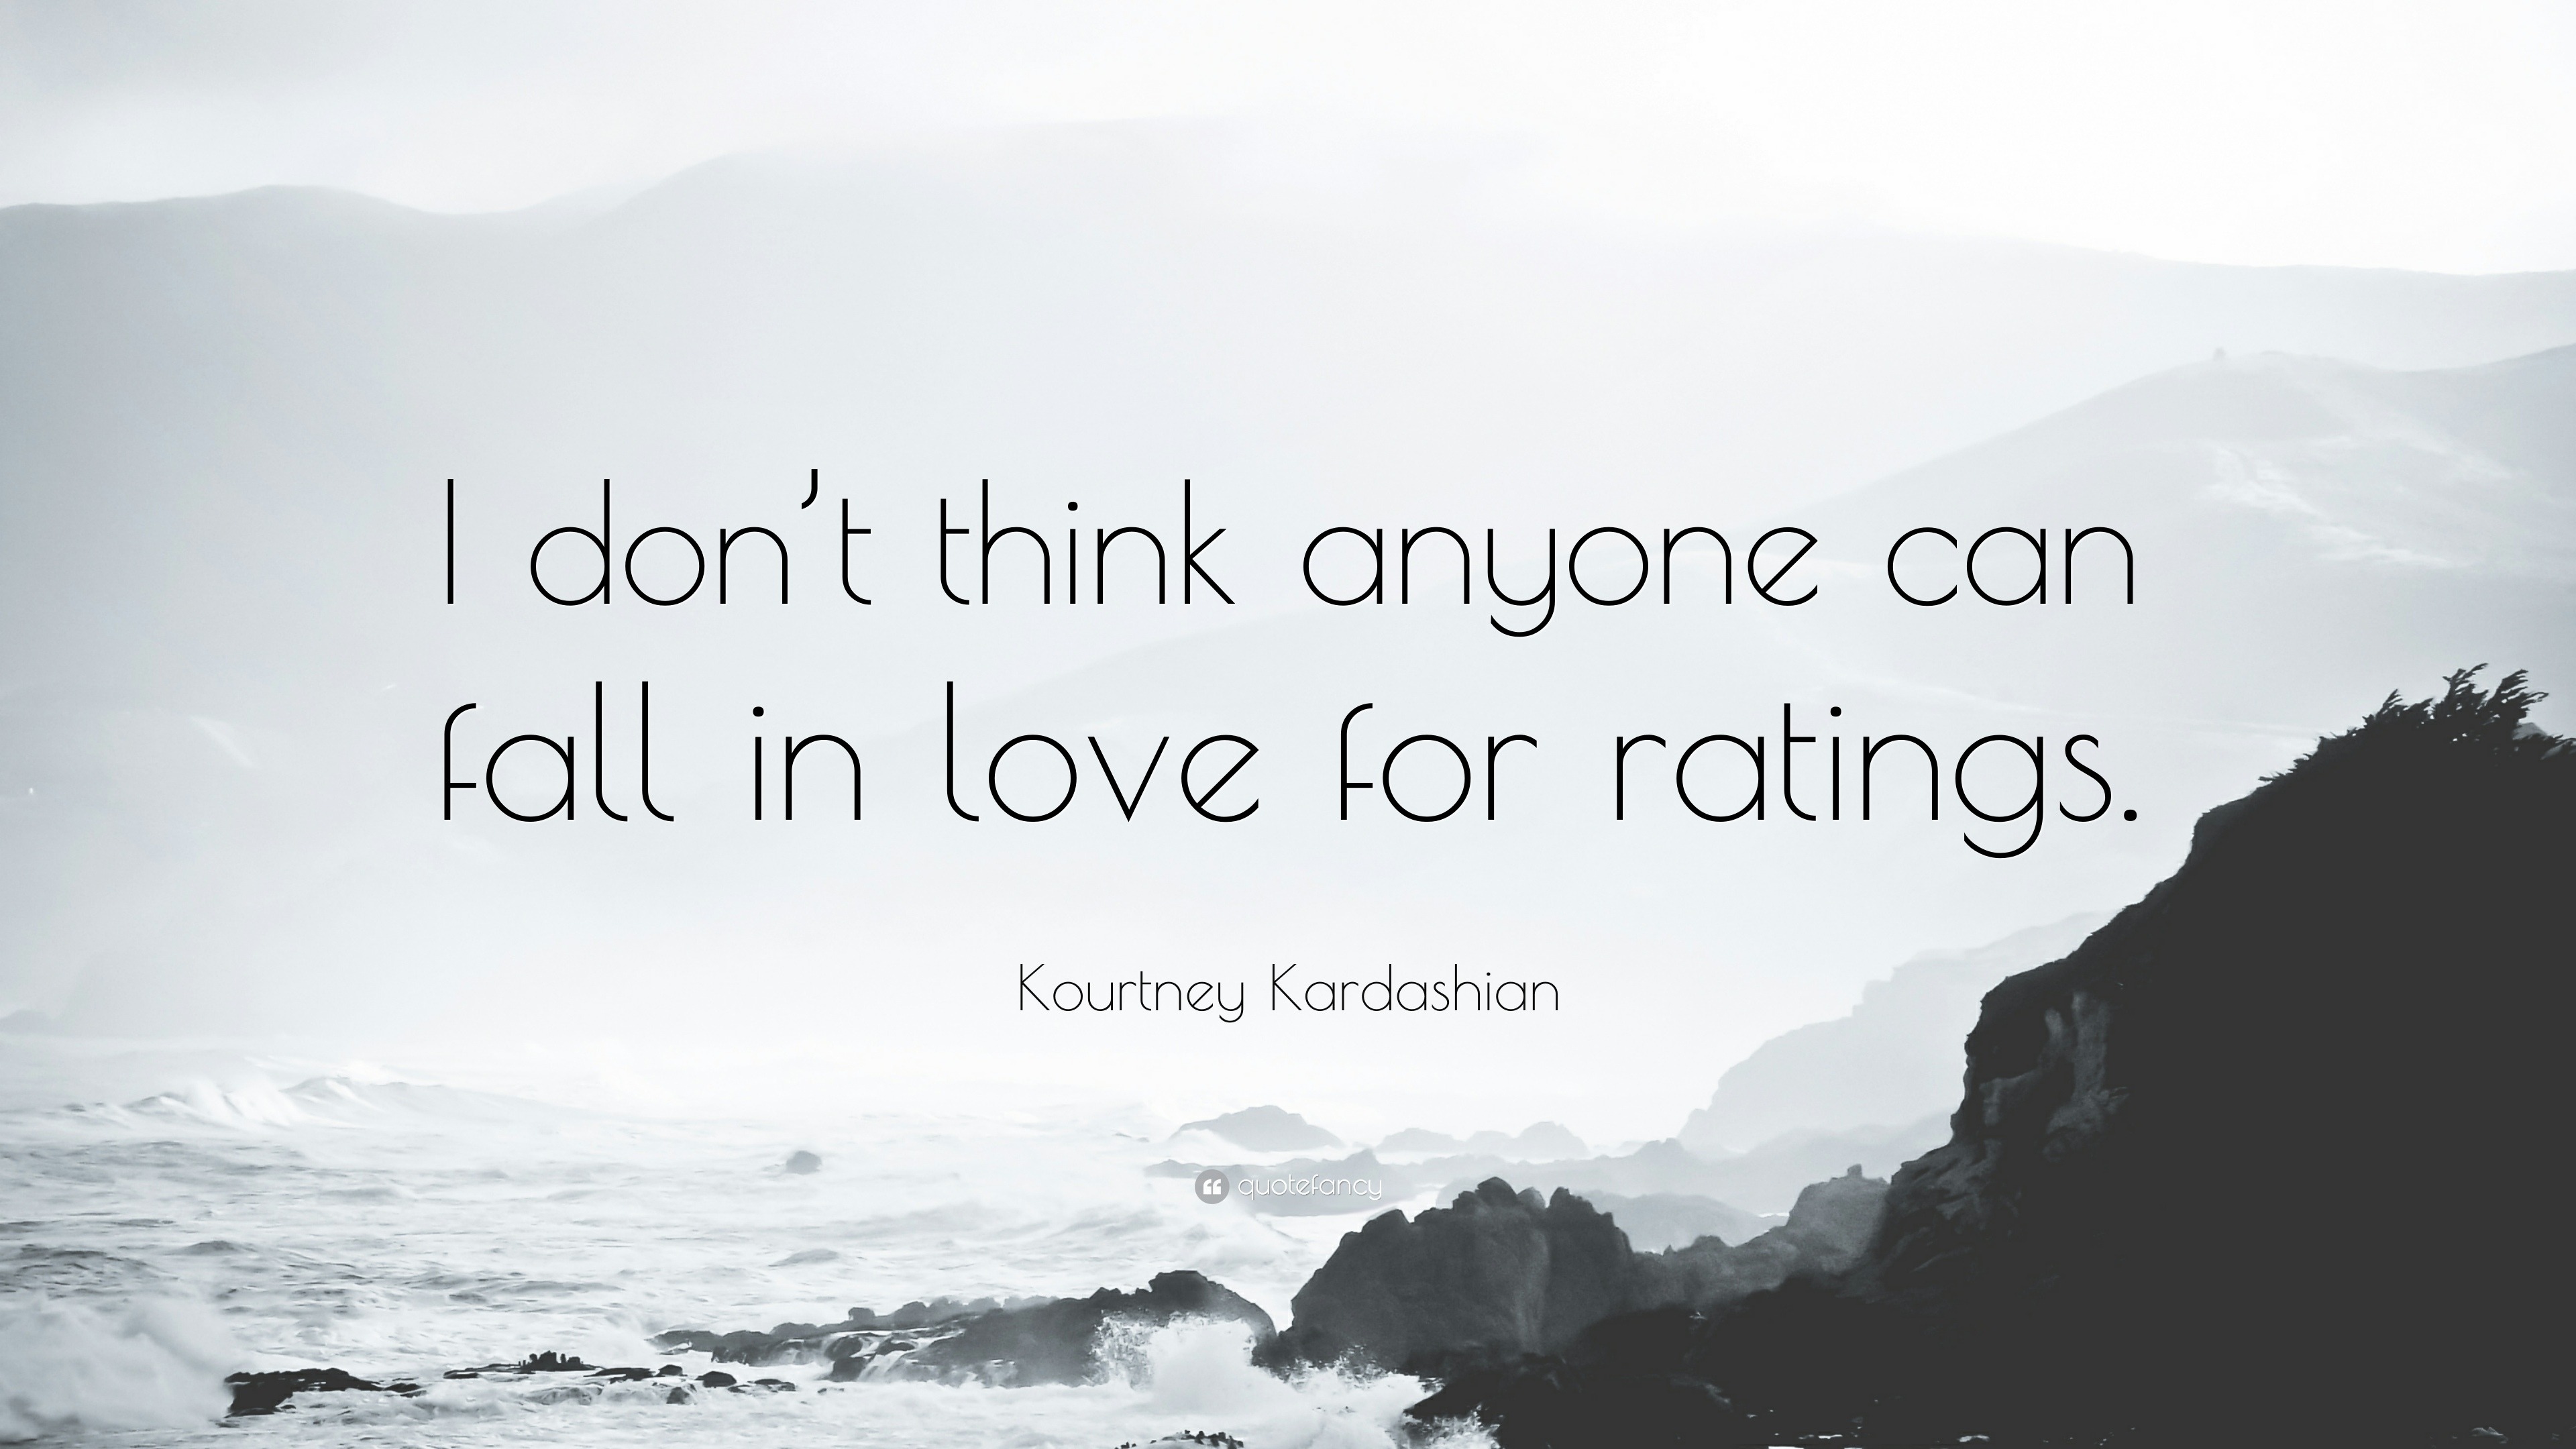 Kourtney Kardashian Quotes (31 wallpapers) - Quotefancy